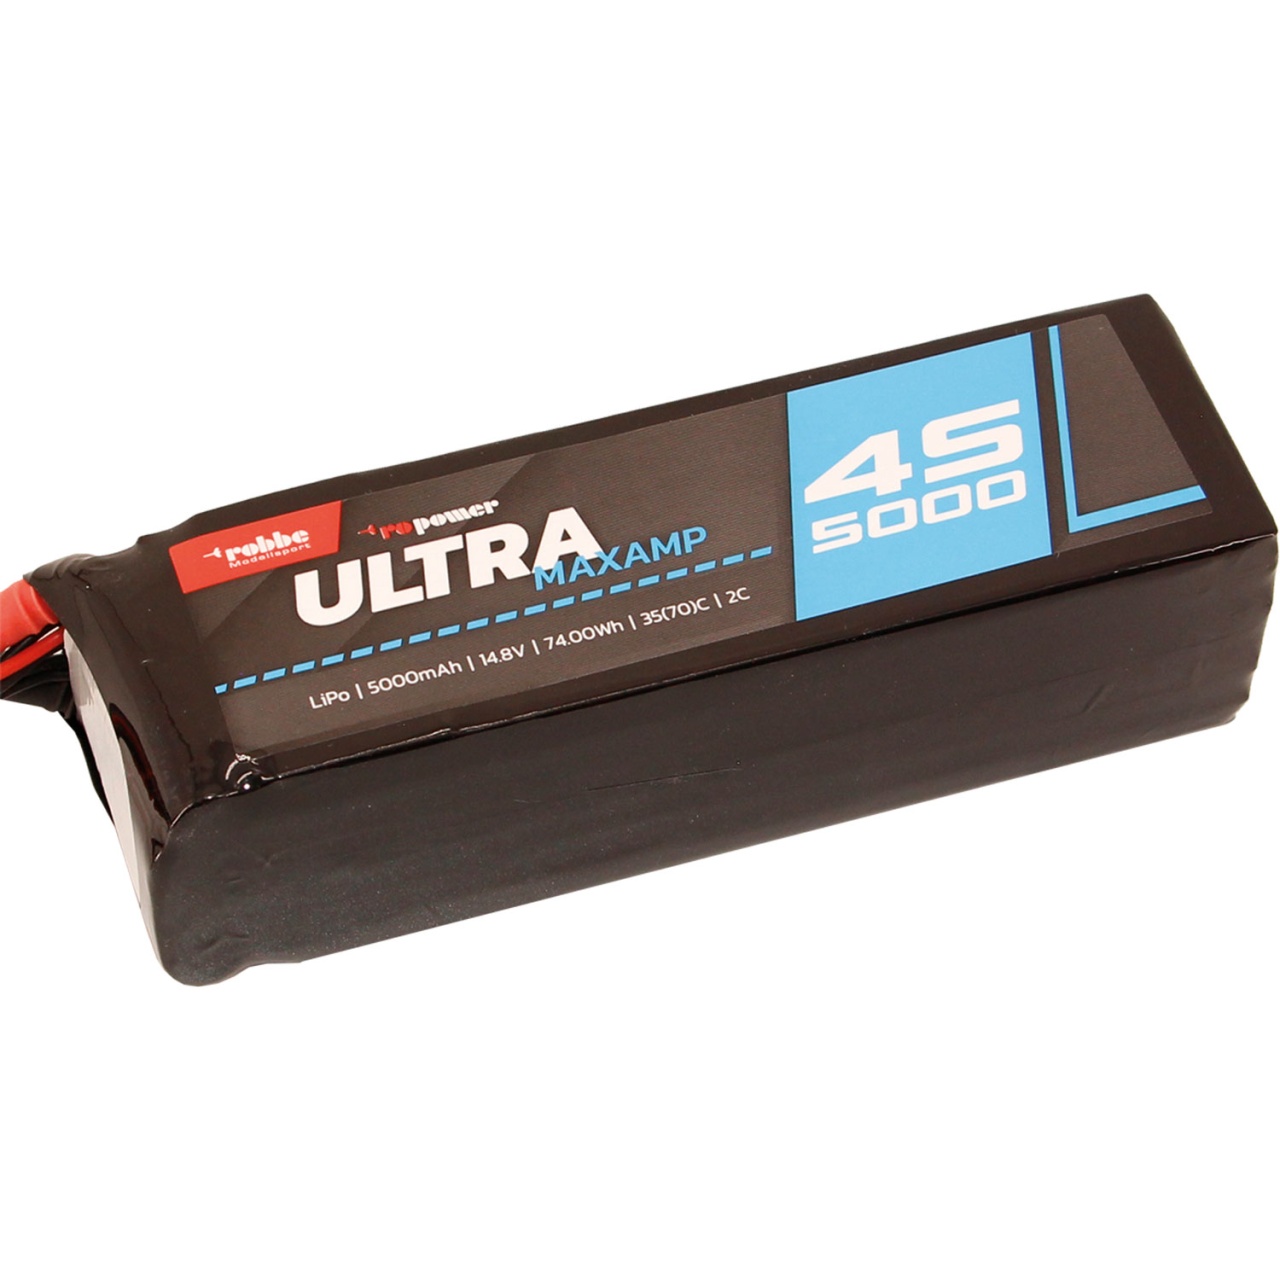 Ultra Max Amp 4S 5000mAh